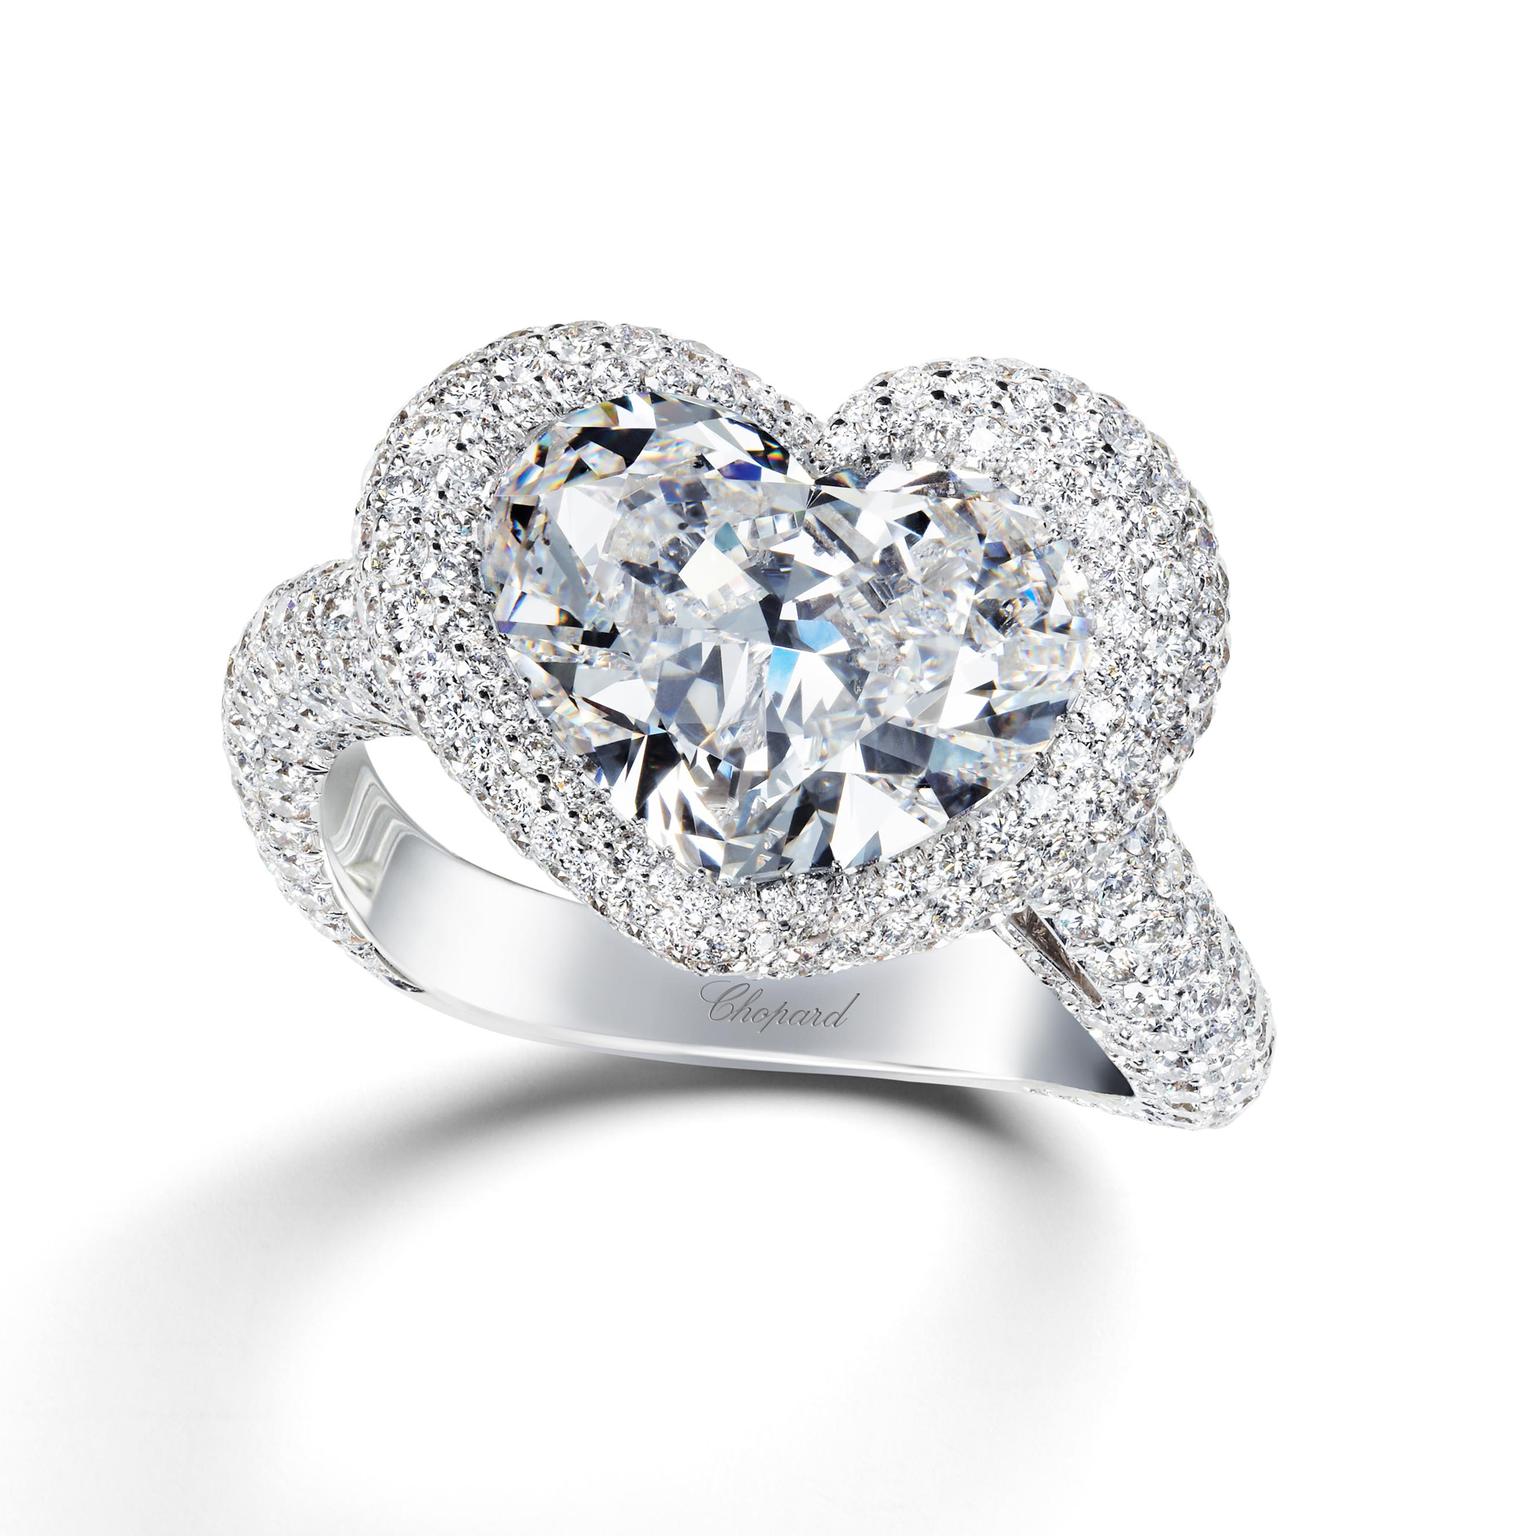 Chopard heart-shaped diamond engagement ring